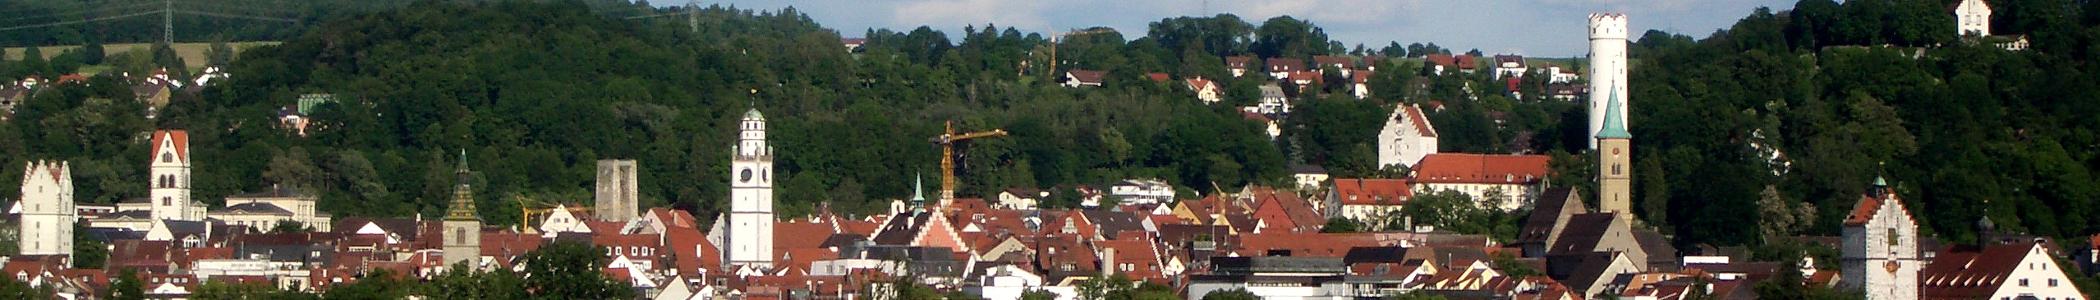 Banner image for Ravensburg on GigsGuide